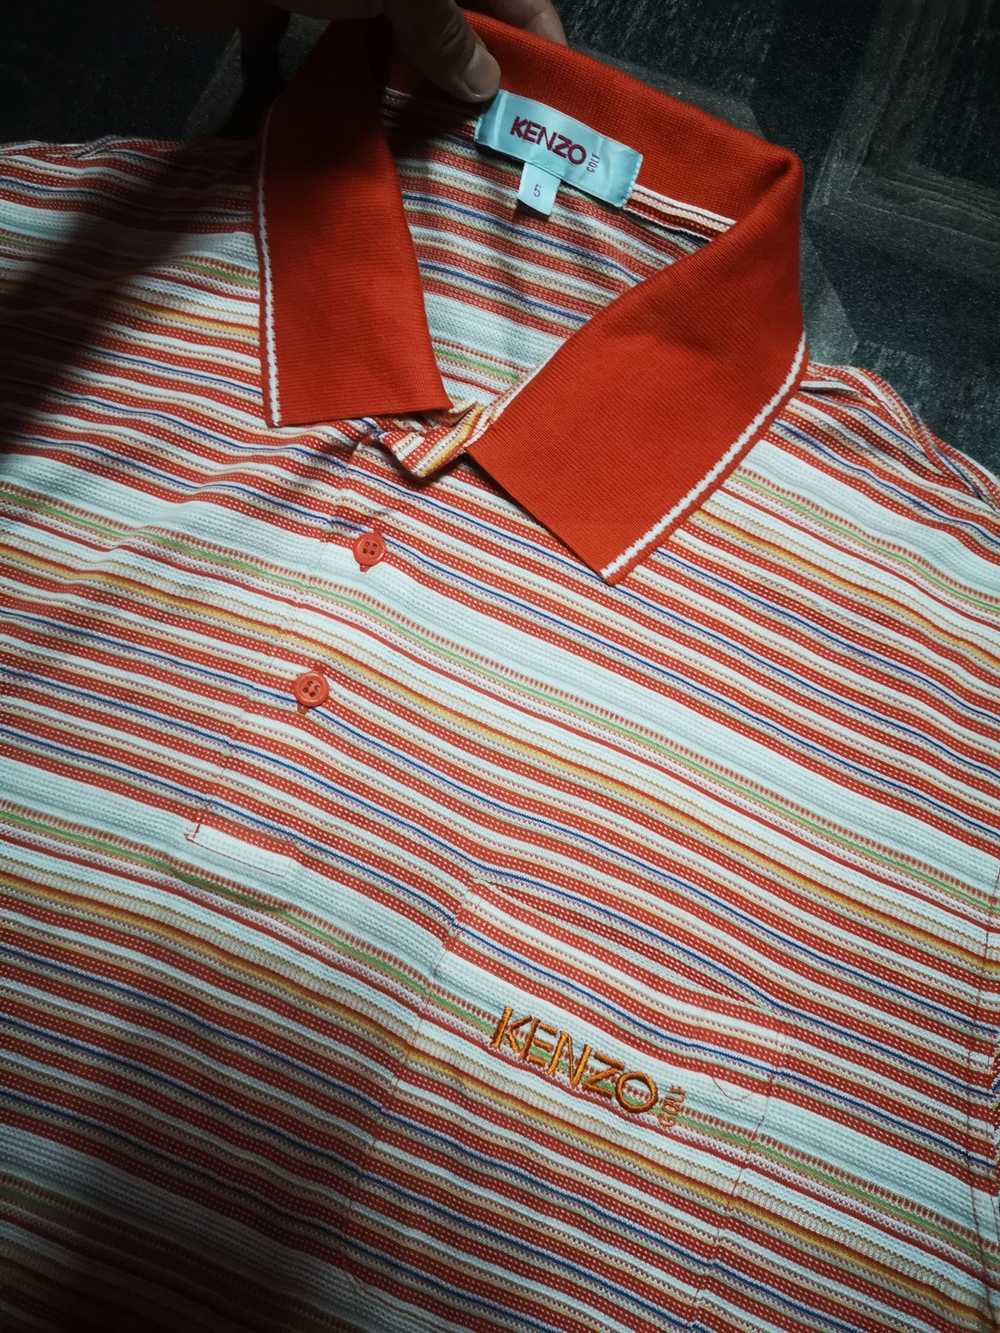 Japanese Brand × Kenzo Kenzo Golf Polo Shirt - image 5